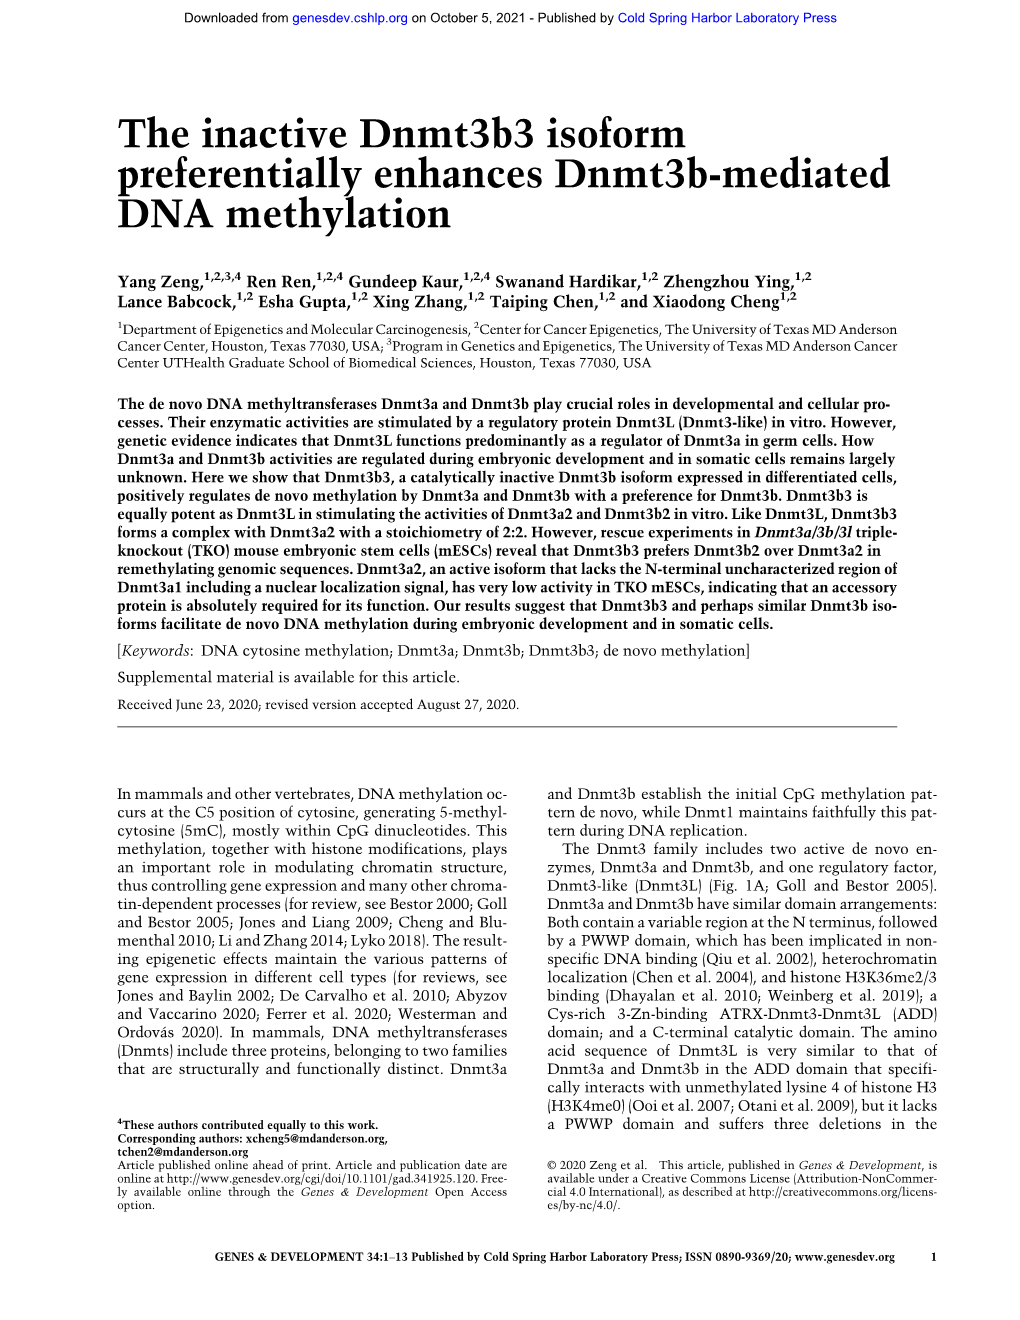 The Inactive Dnmt3b3 Isoform Preferentially Enhances Dnmt3b-Mediated DNA Methylation